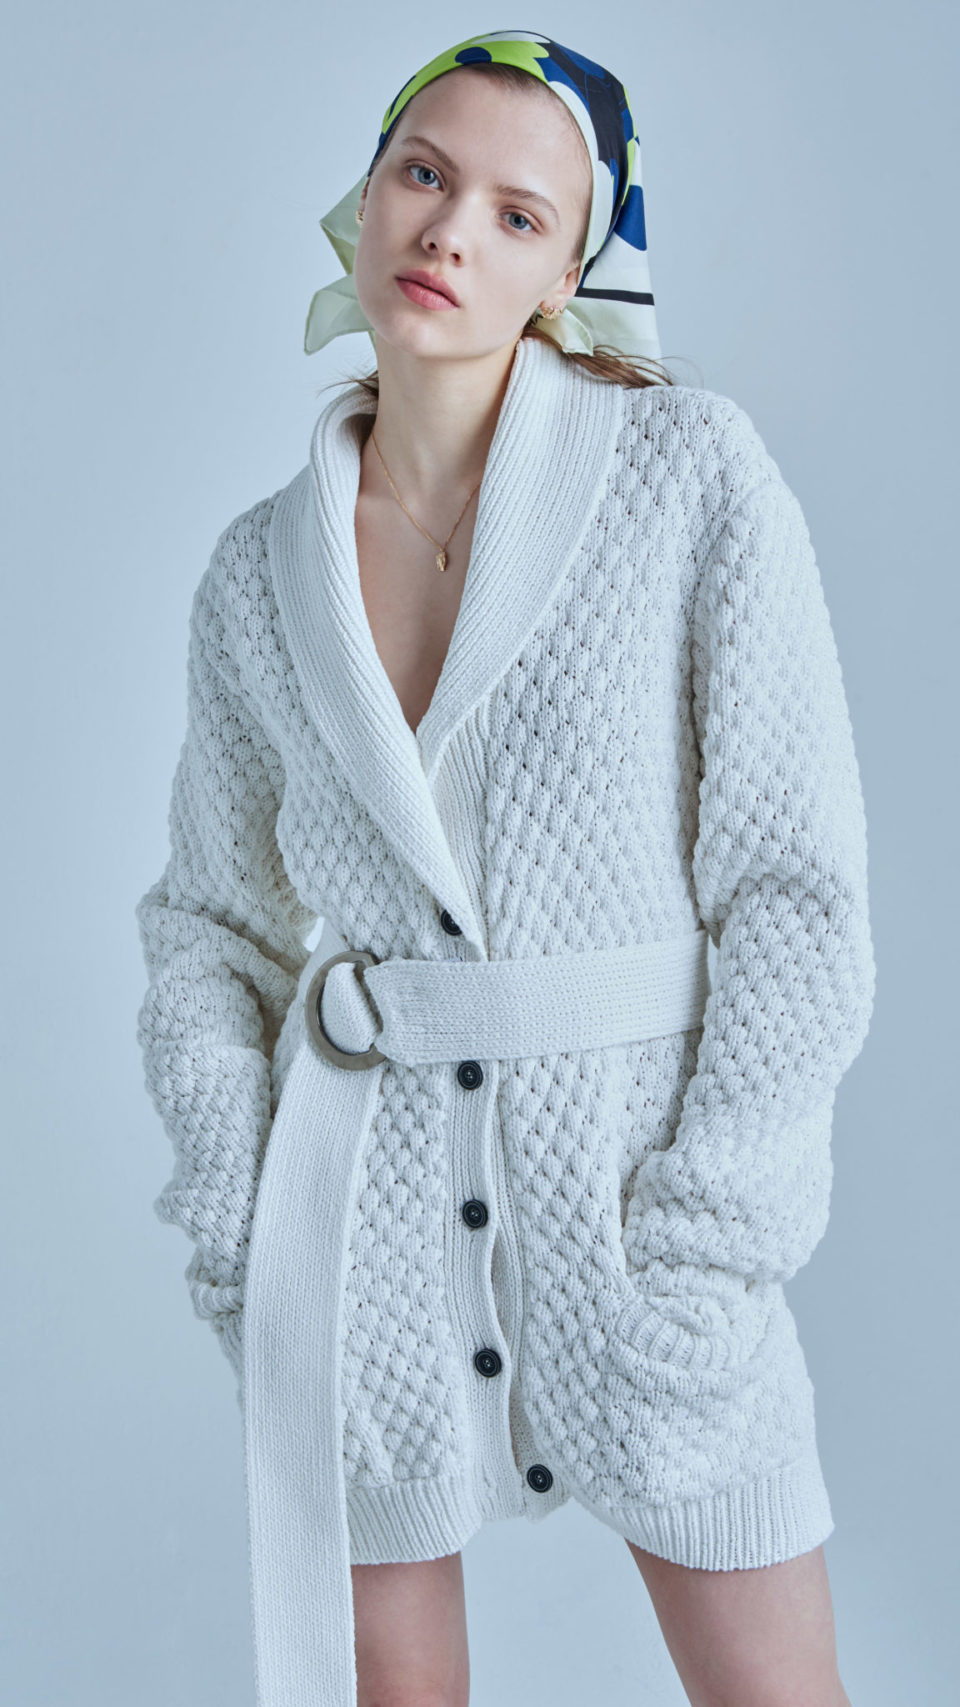 Model wearing MAR, a Canadian made knit cardigan sweater by Canadian fashion designer Maria Karimi